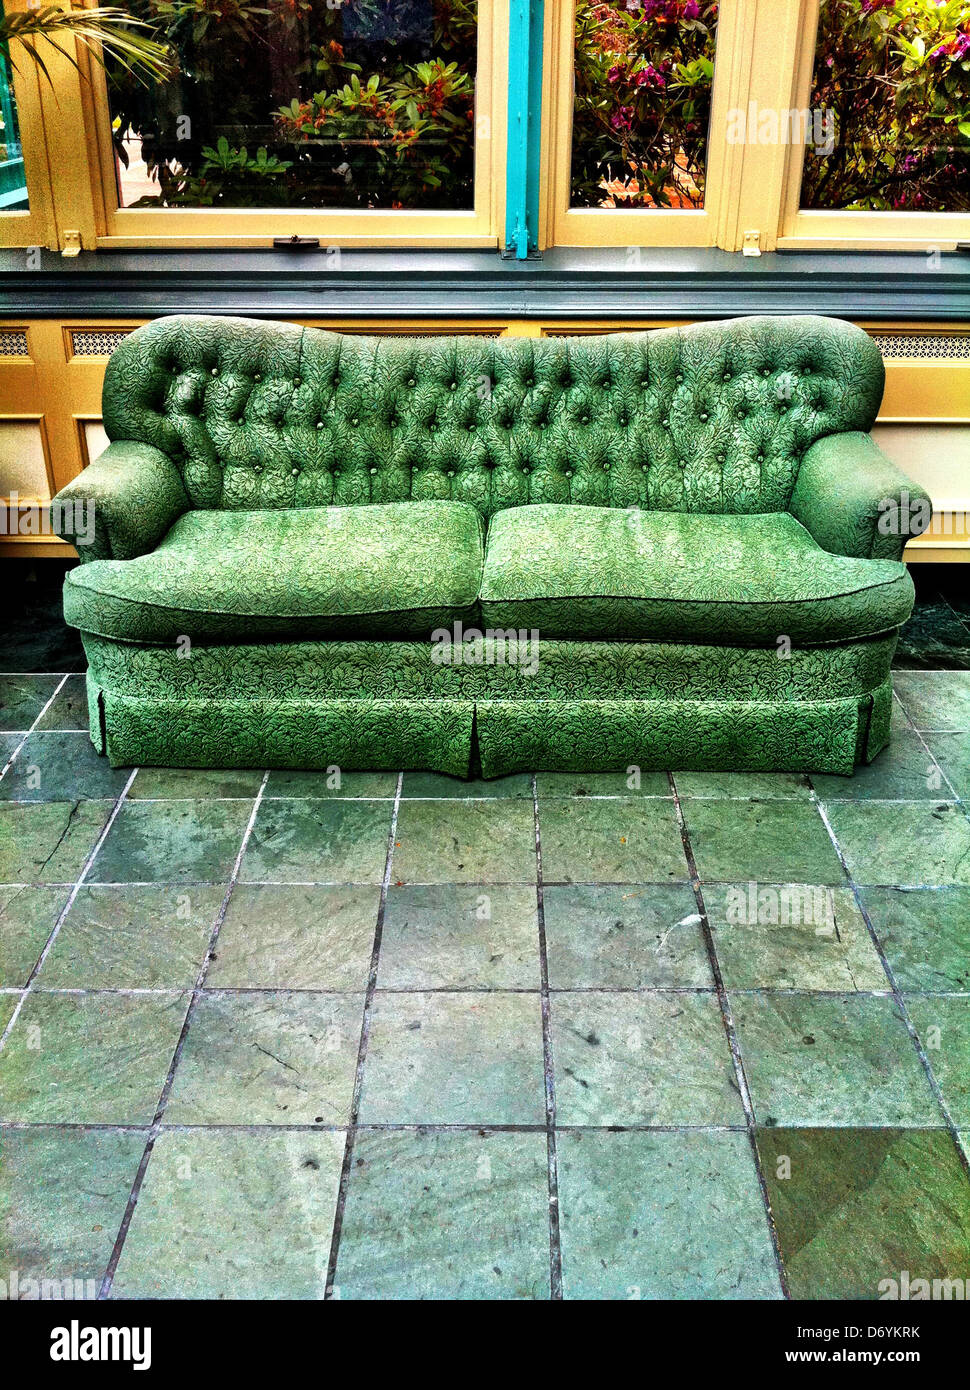 Sofa on stone tile floor Stock Photo